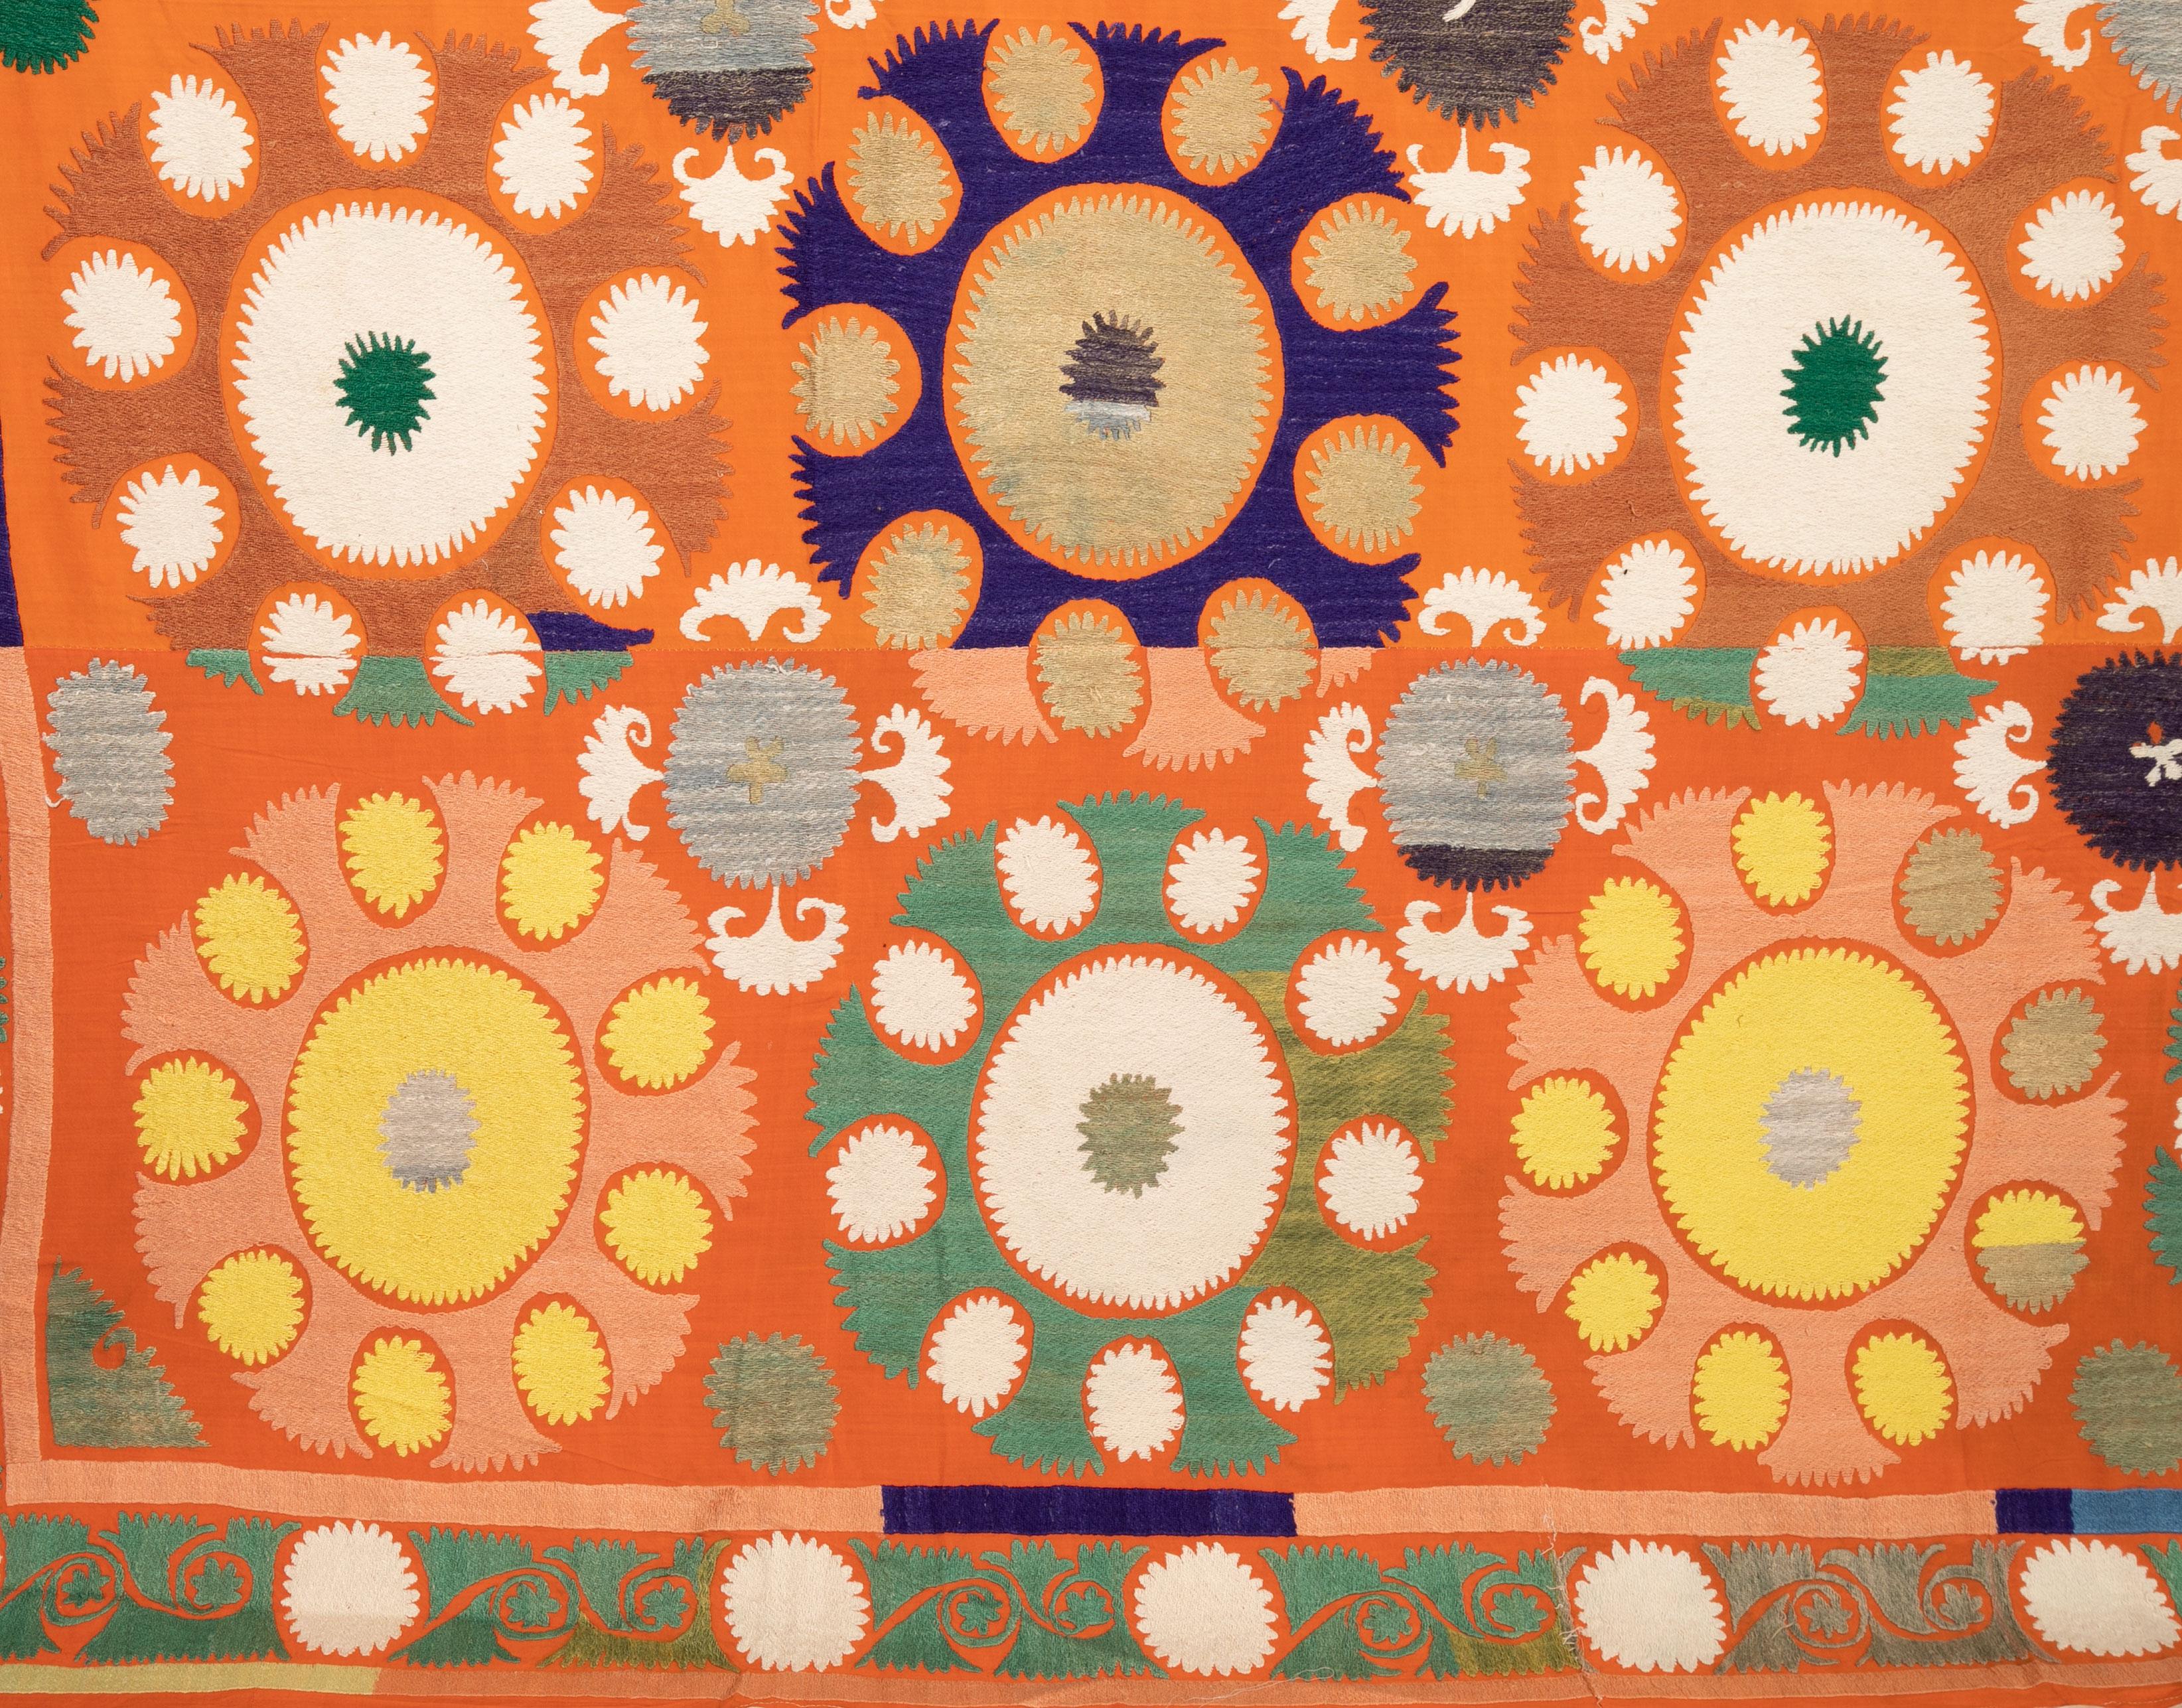 Cotton Vintage Orange Suzani from Samarkand Uzbekistan, Central Asia, 1970s